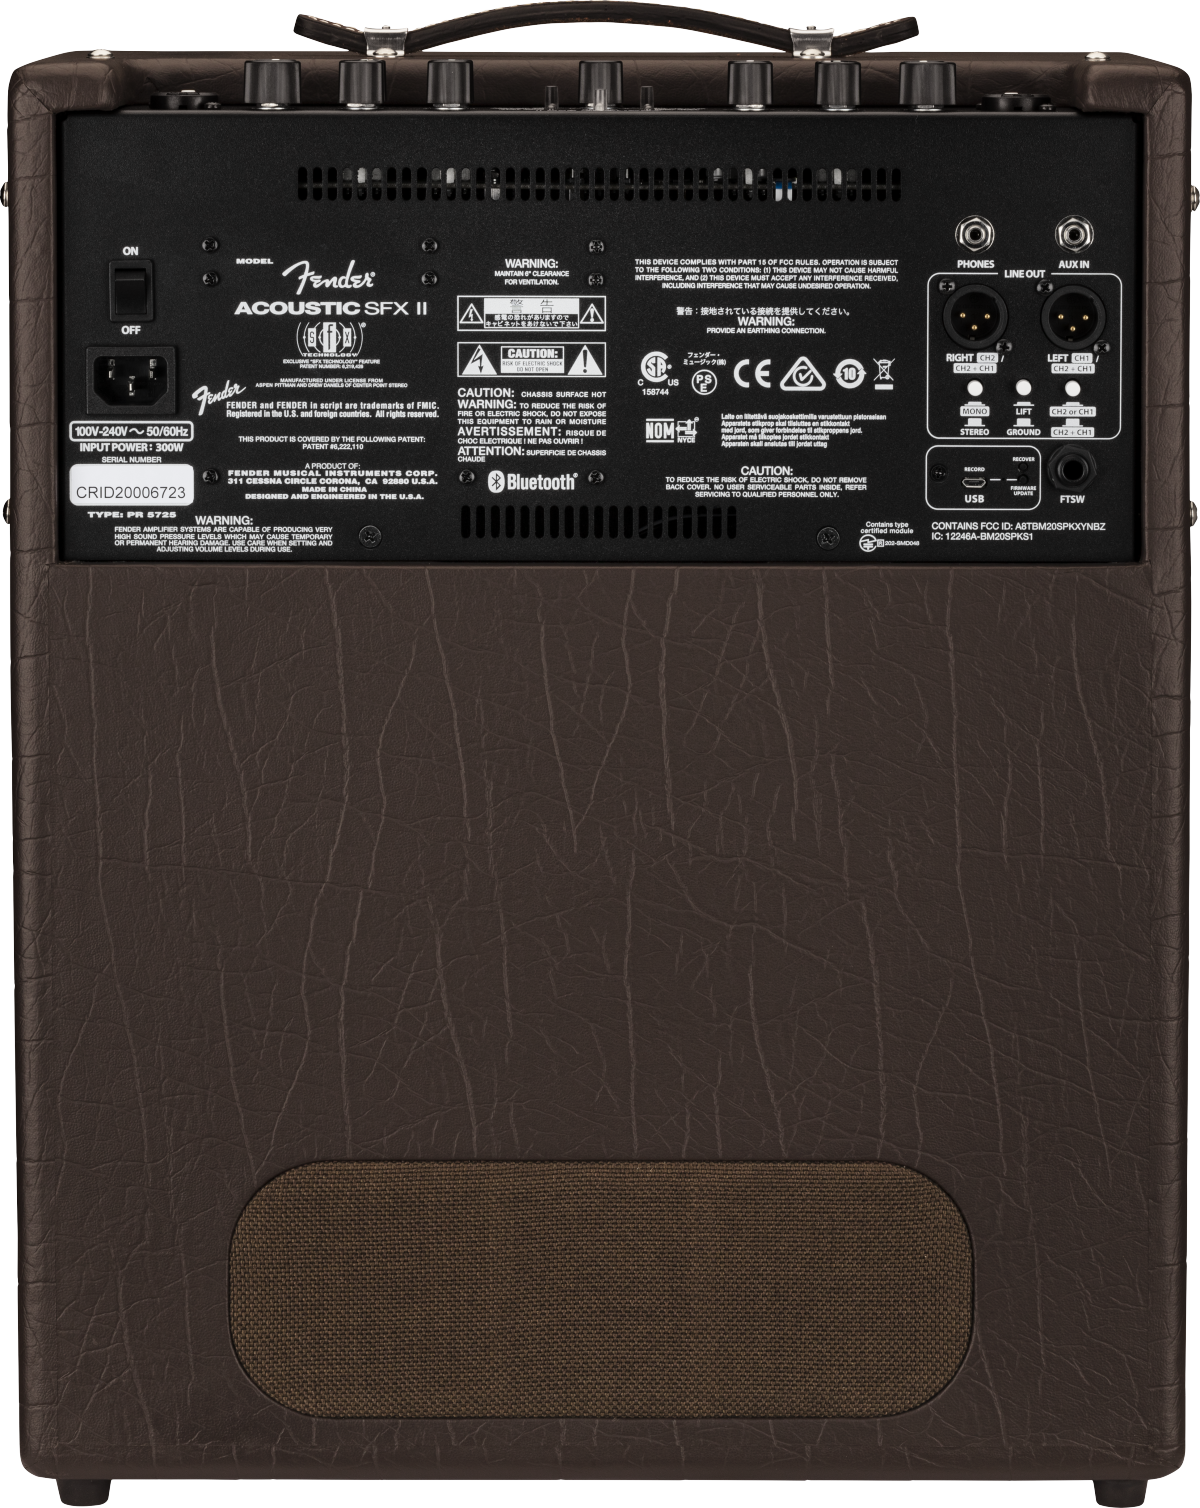 Fender Acoustic Jr Sfx Ii 2x100w 1x8 + 1x6.5 - Combo amplificador acústico - Variation 1